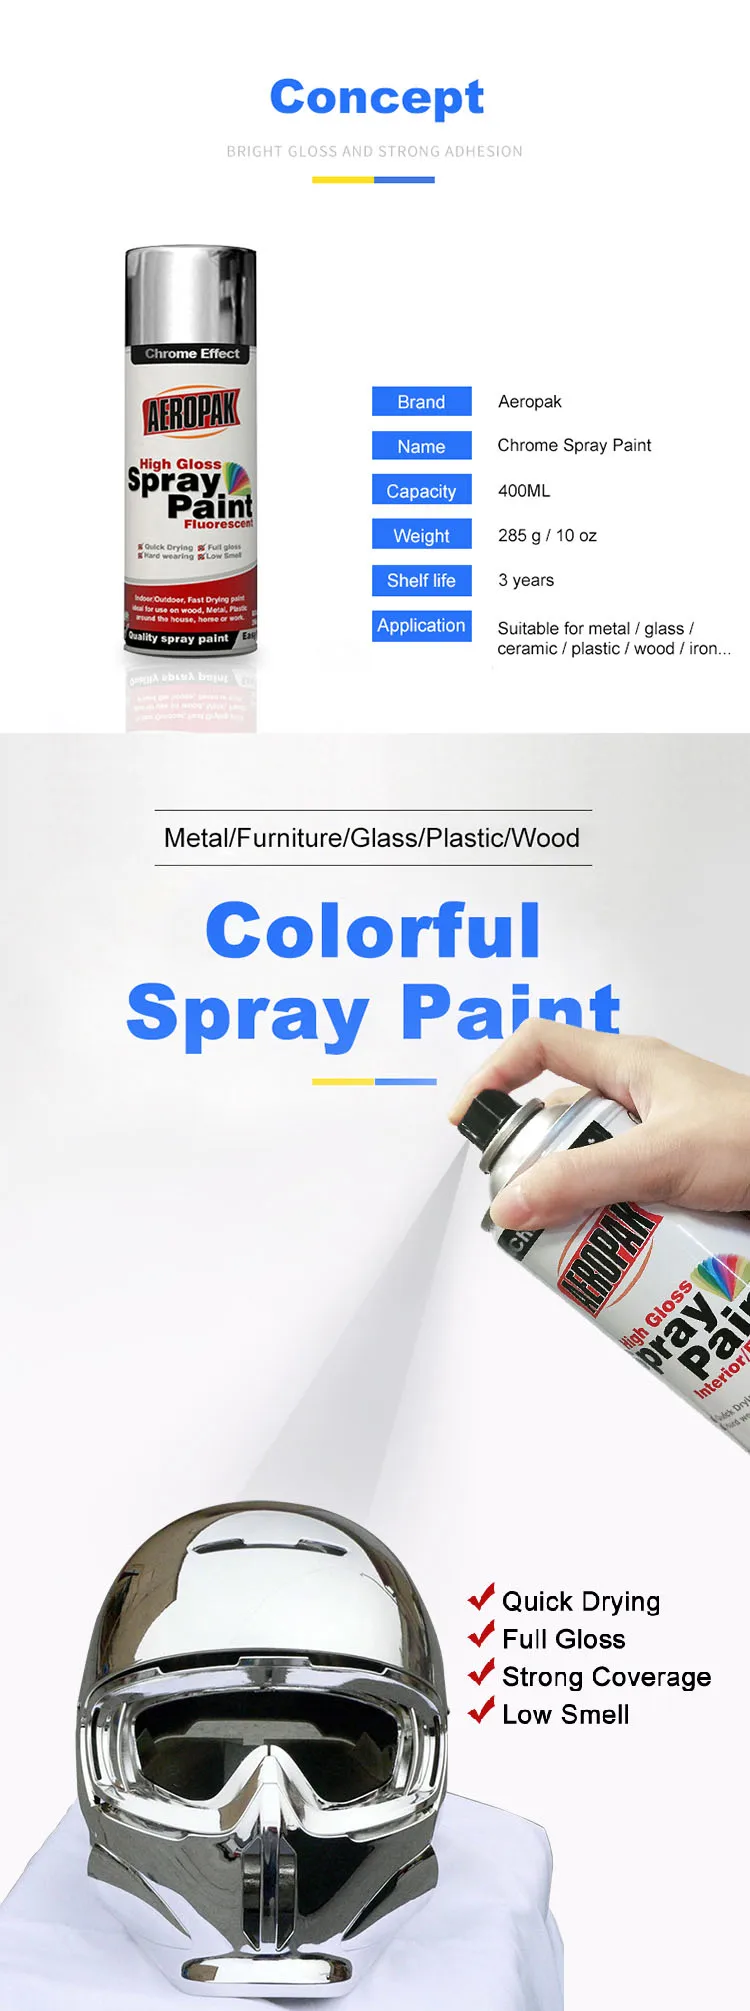 Aeropak brands Mirror Chrome Spray Paint